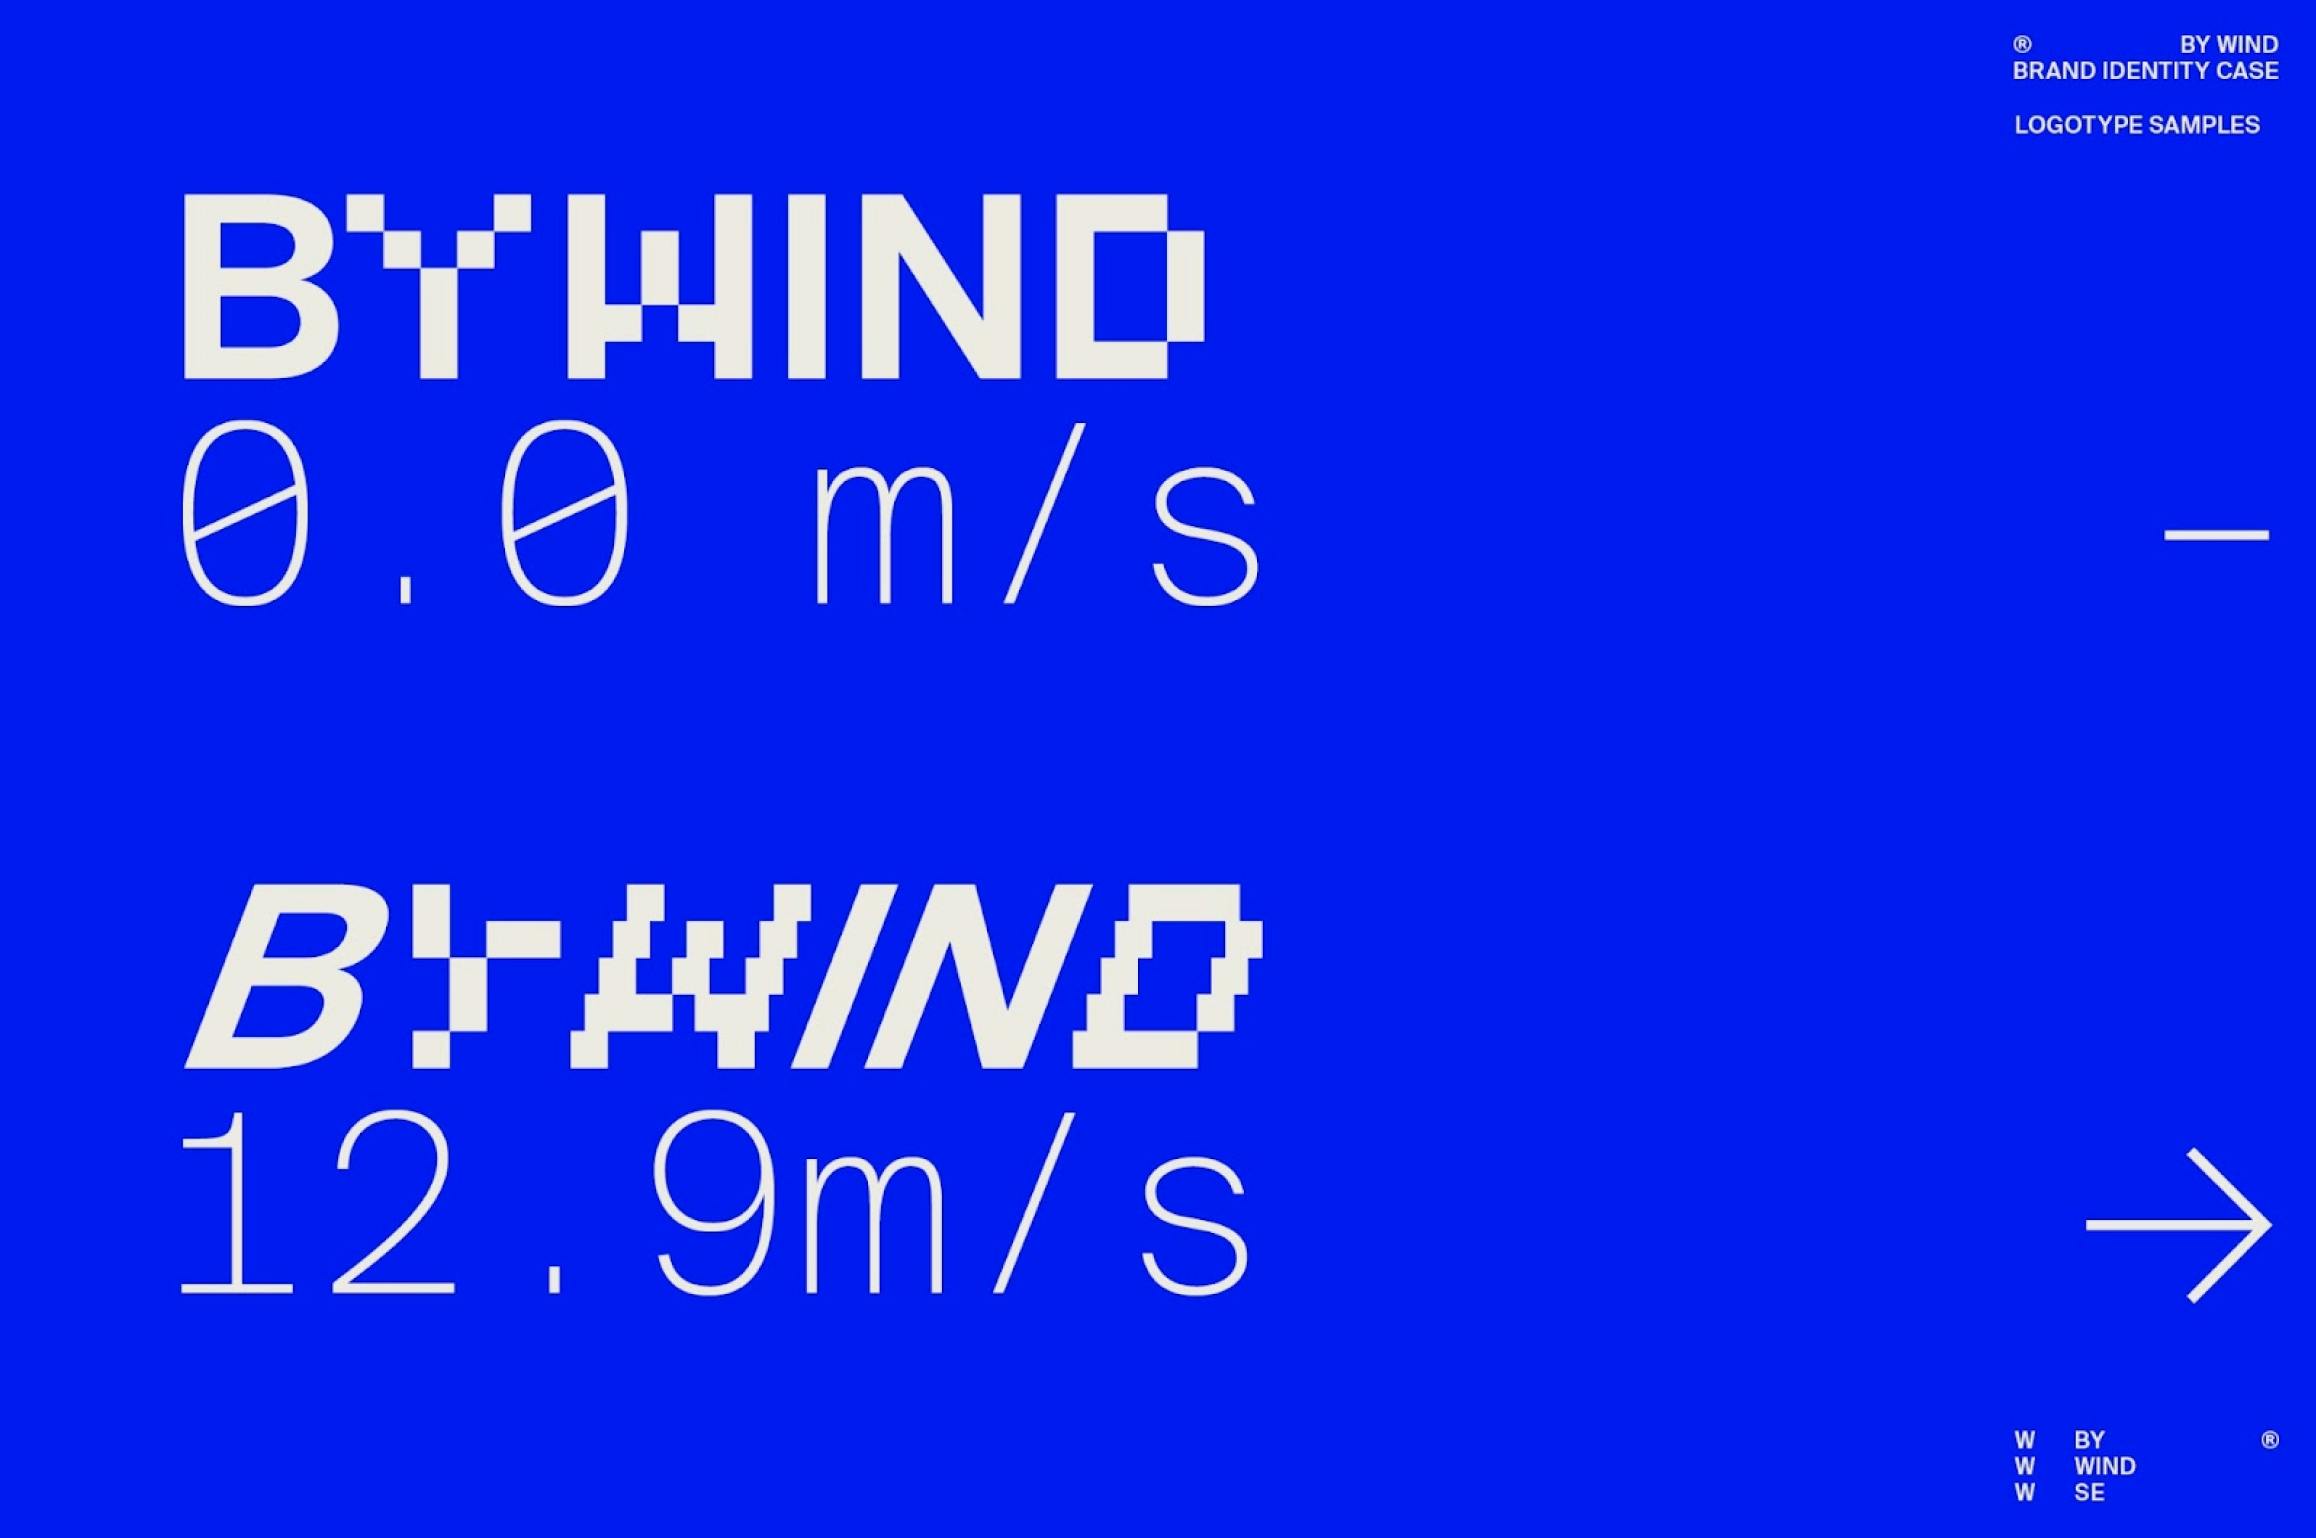 Printing company By Wind's logo.